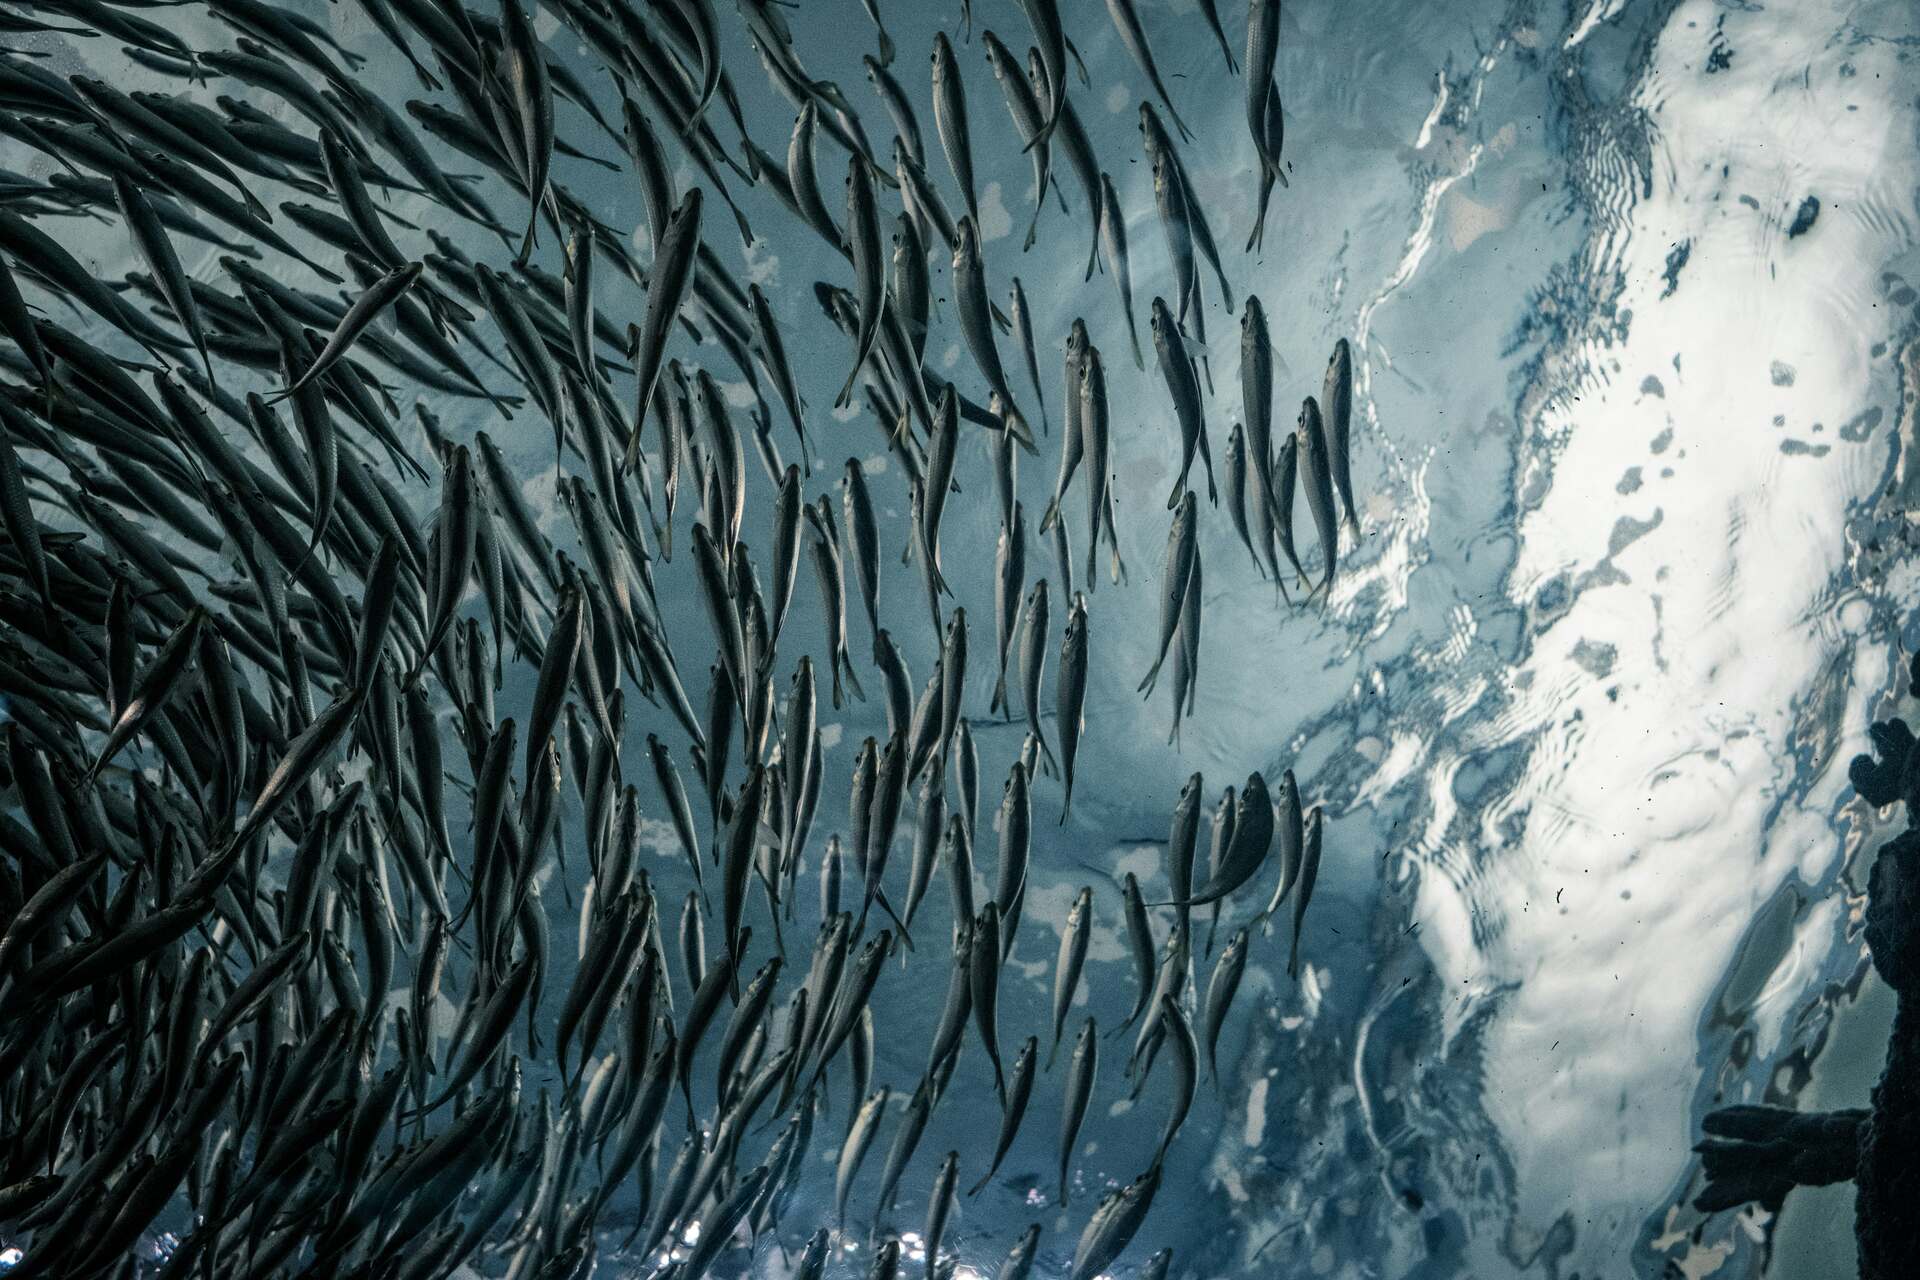 School of Sardines